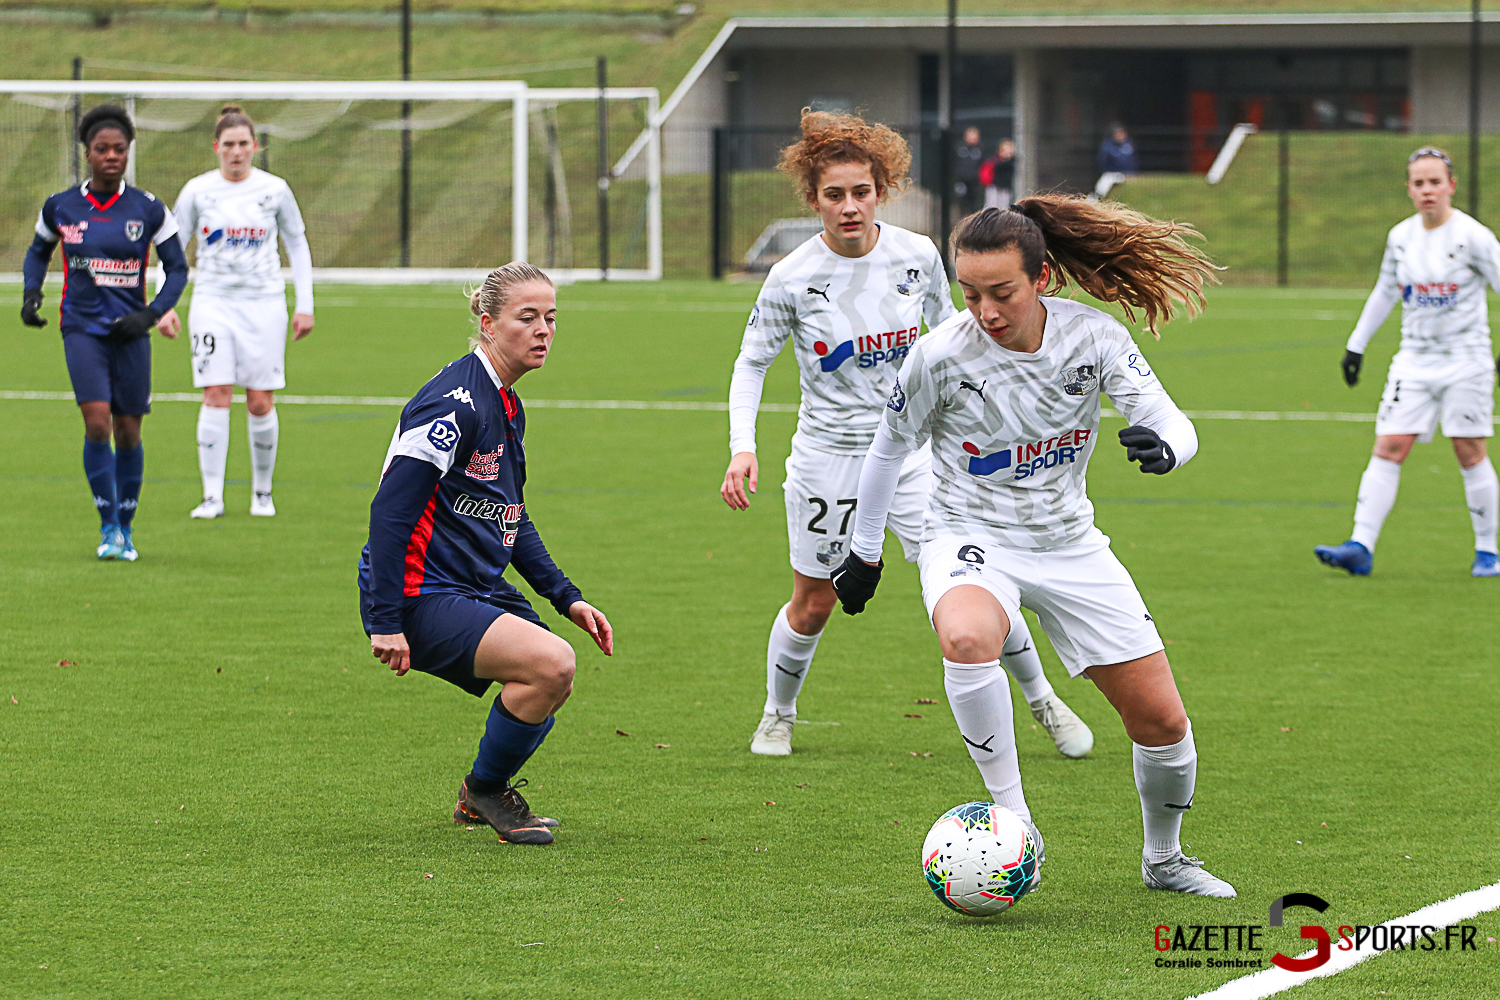 Football Feminin Asc Vs Thonon Evian Gazettesports Coralie Sombret 7